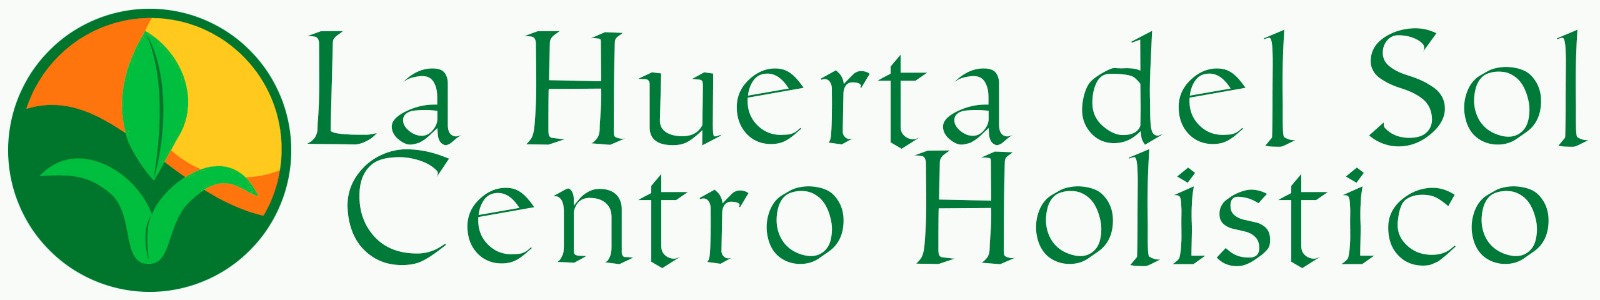 HuertaGreen